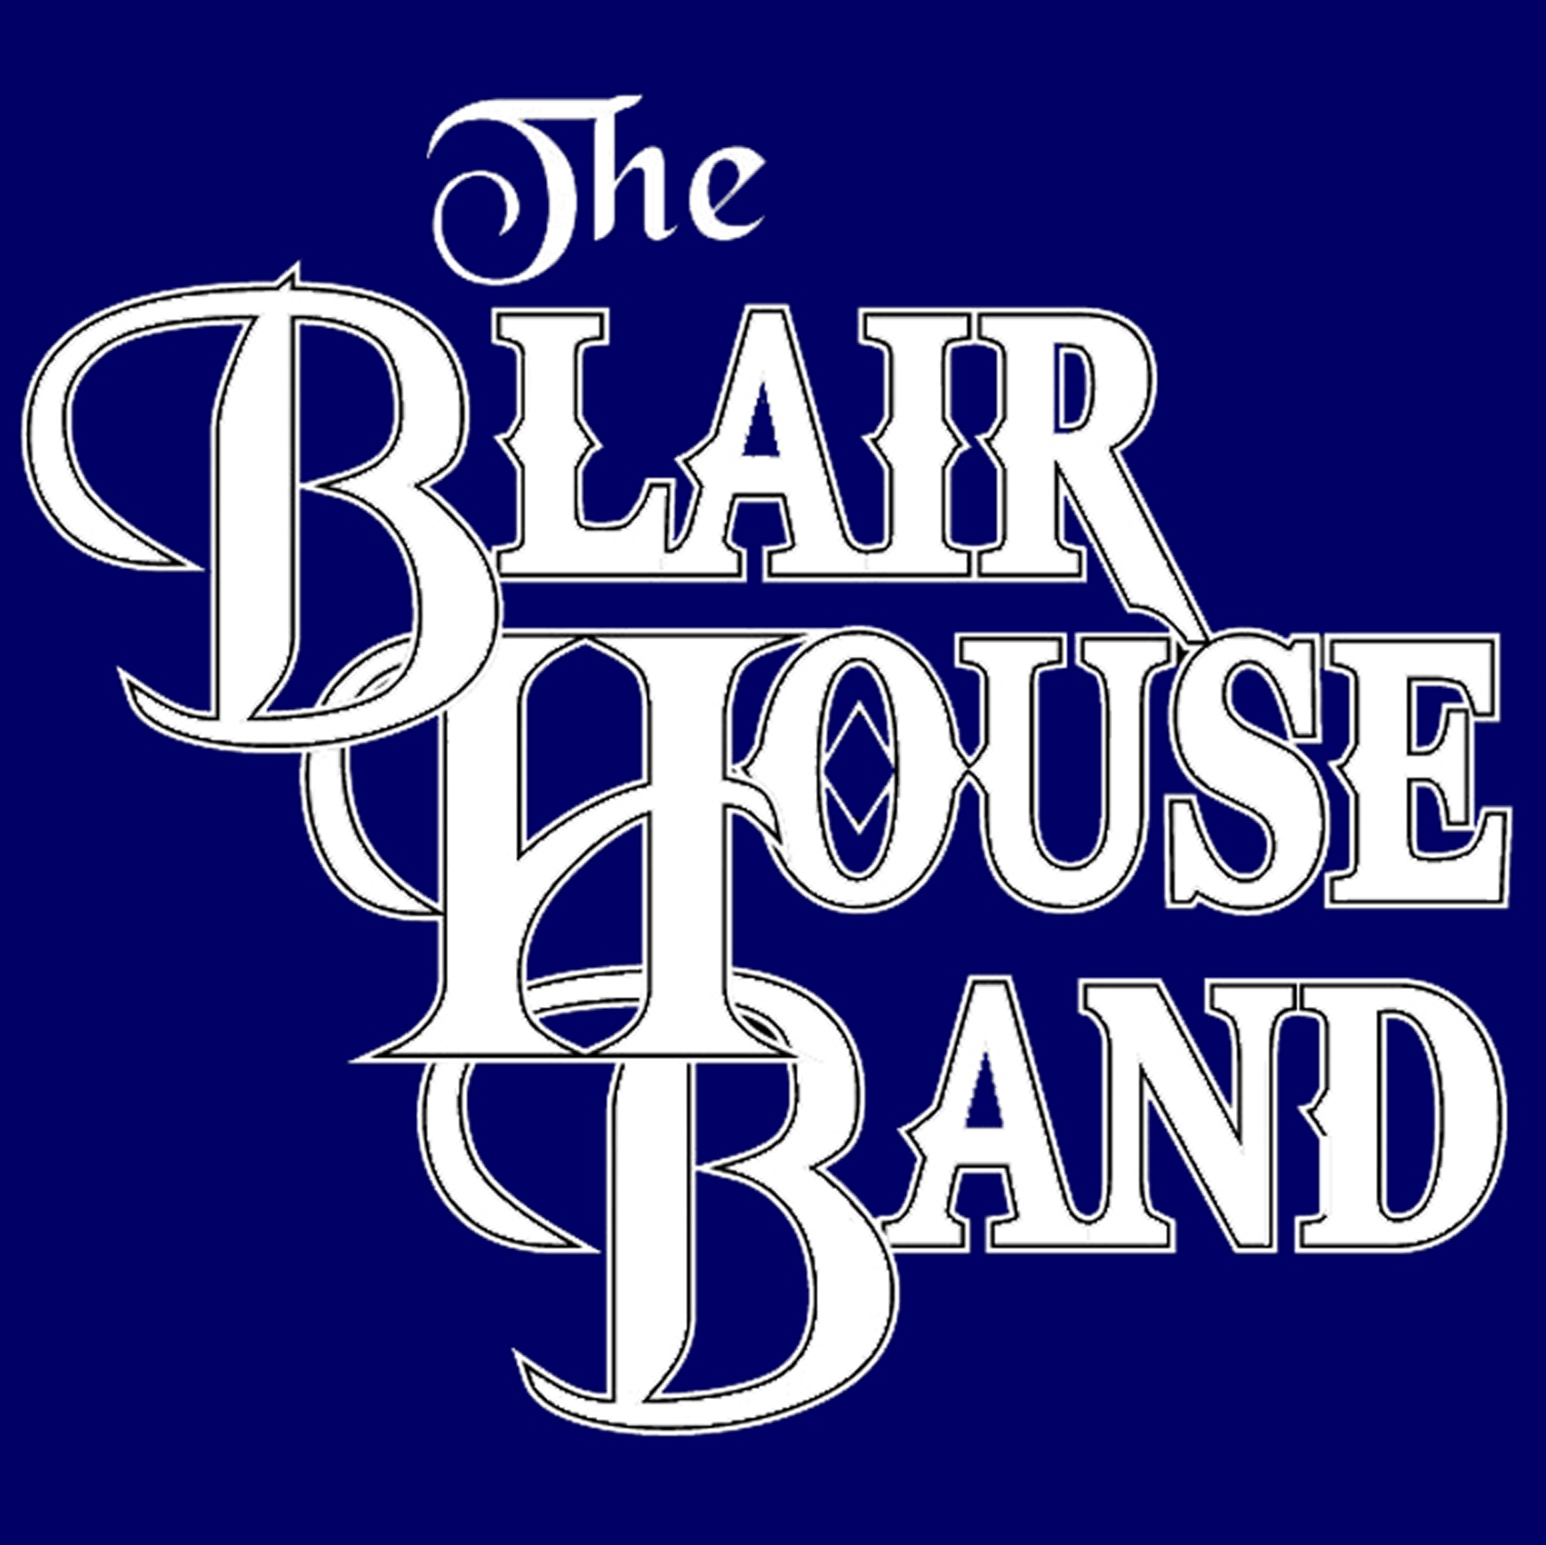 The Blair House Band